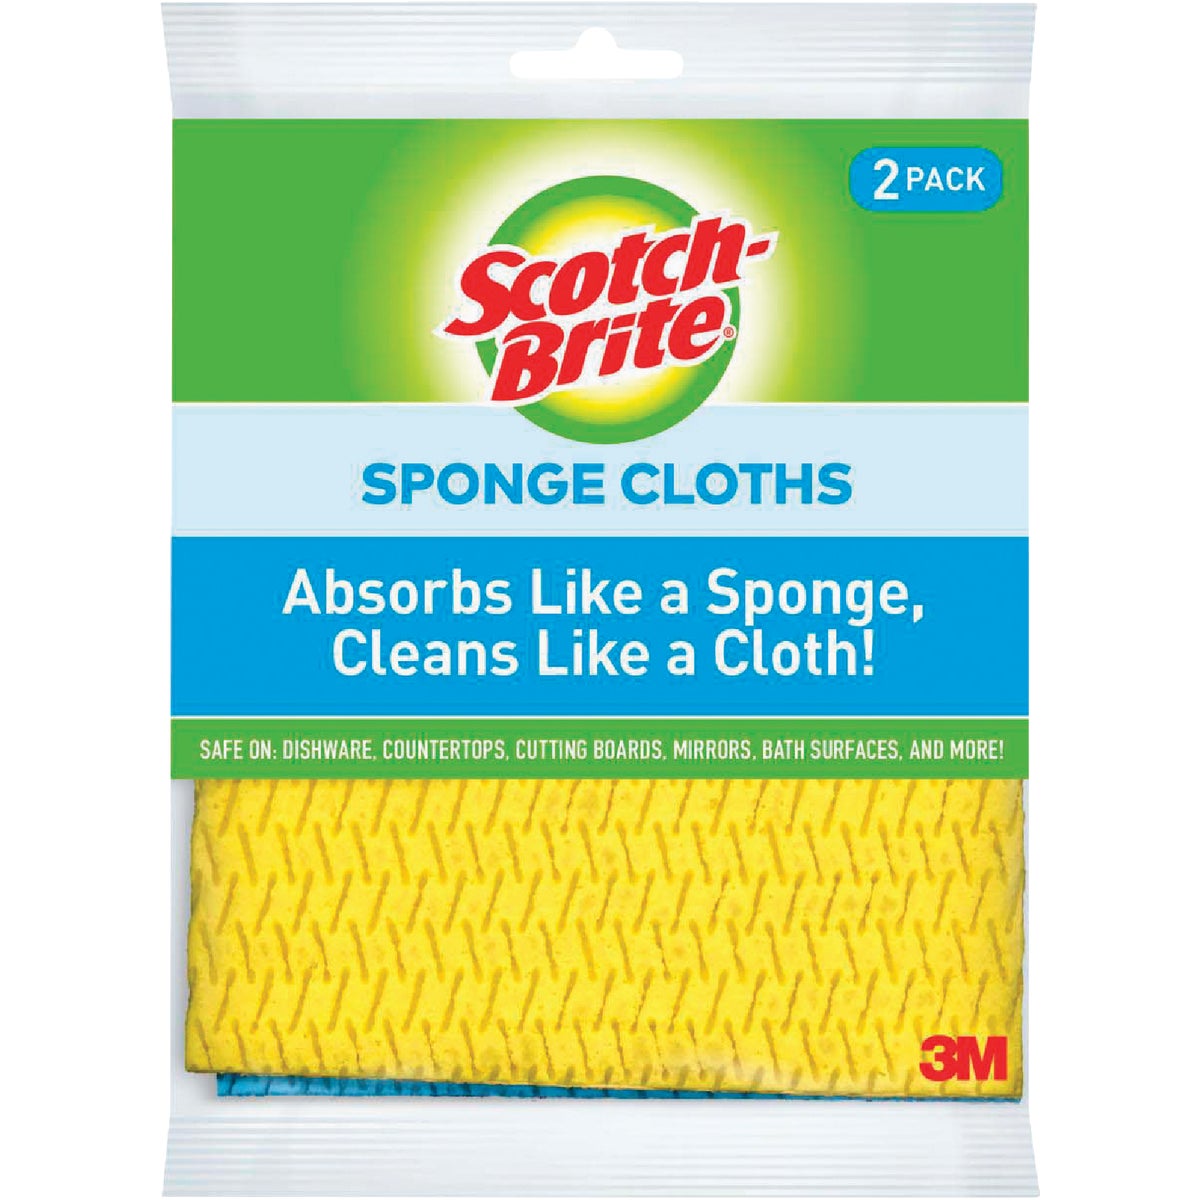 Item 600956, Made with 100% natural fibers, Scotch-Brite Sponge Cloth absorbs like a 